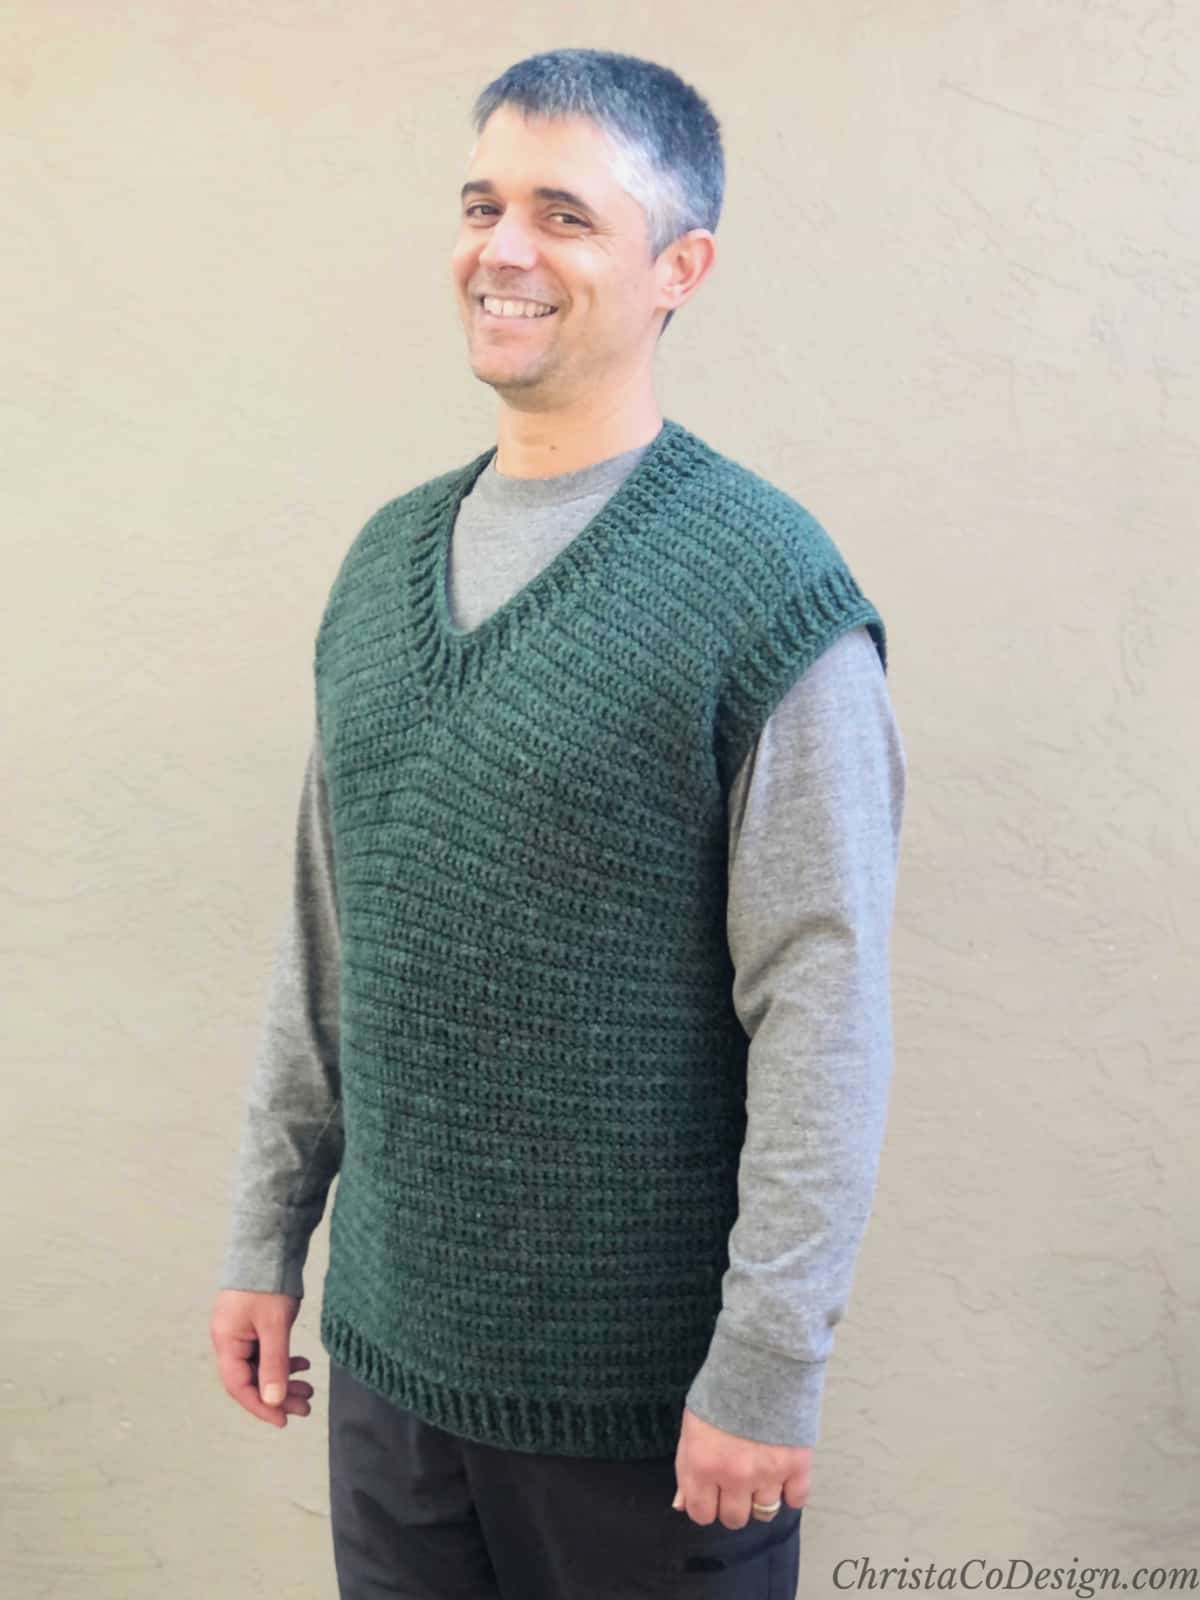 Crochet vest pattern for men hot managed forex account